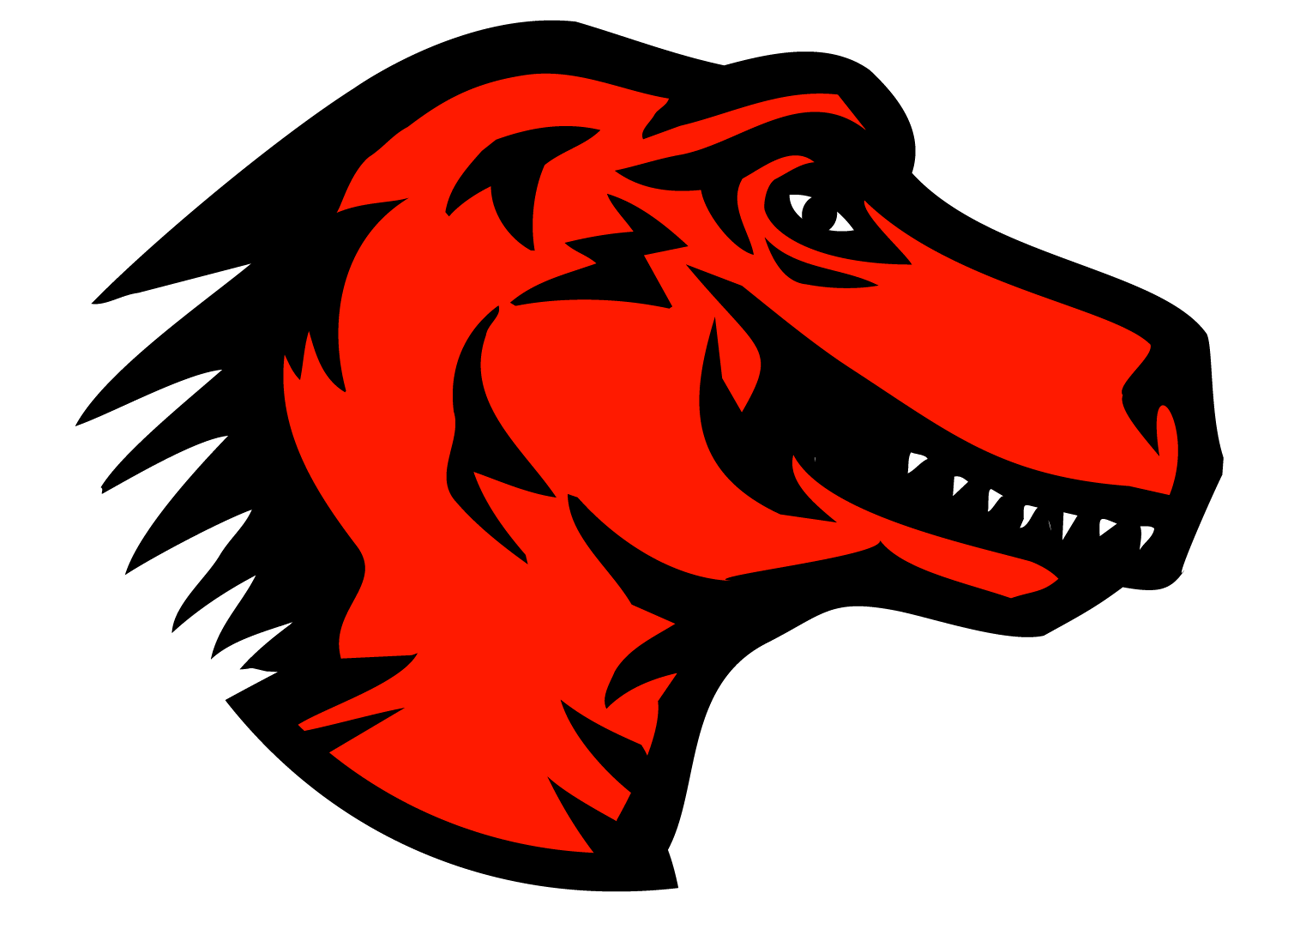 Red Firefox Logo - File:Mozilla dinosaur head logo.png - Wikimedia Commons